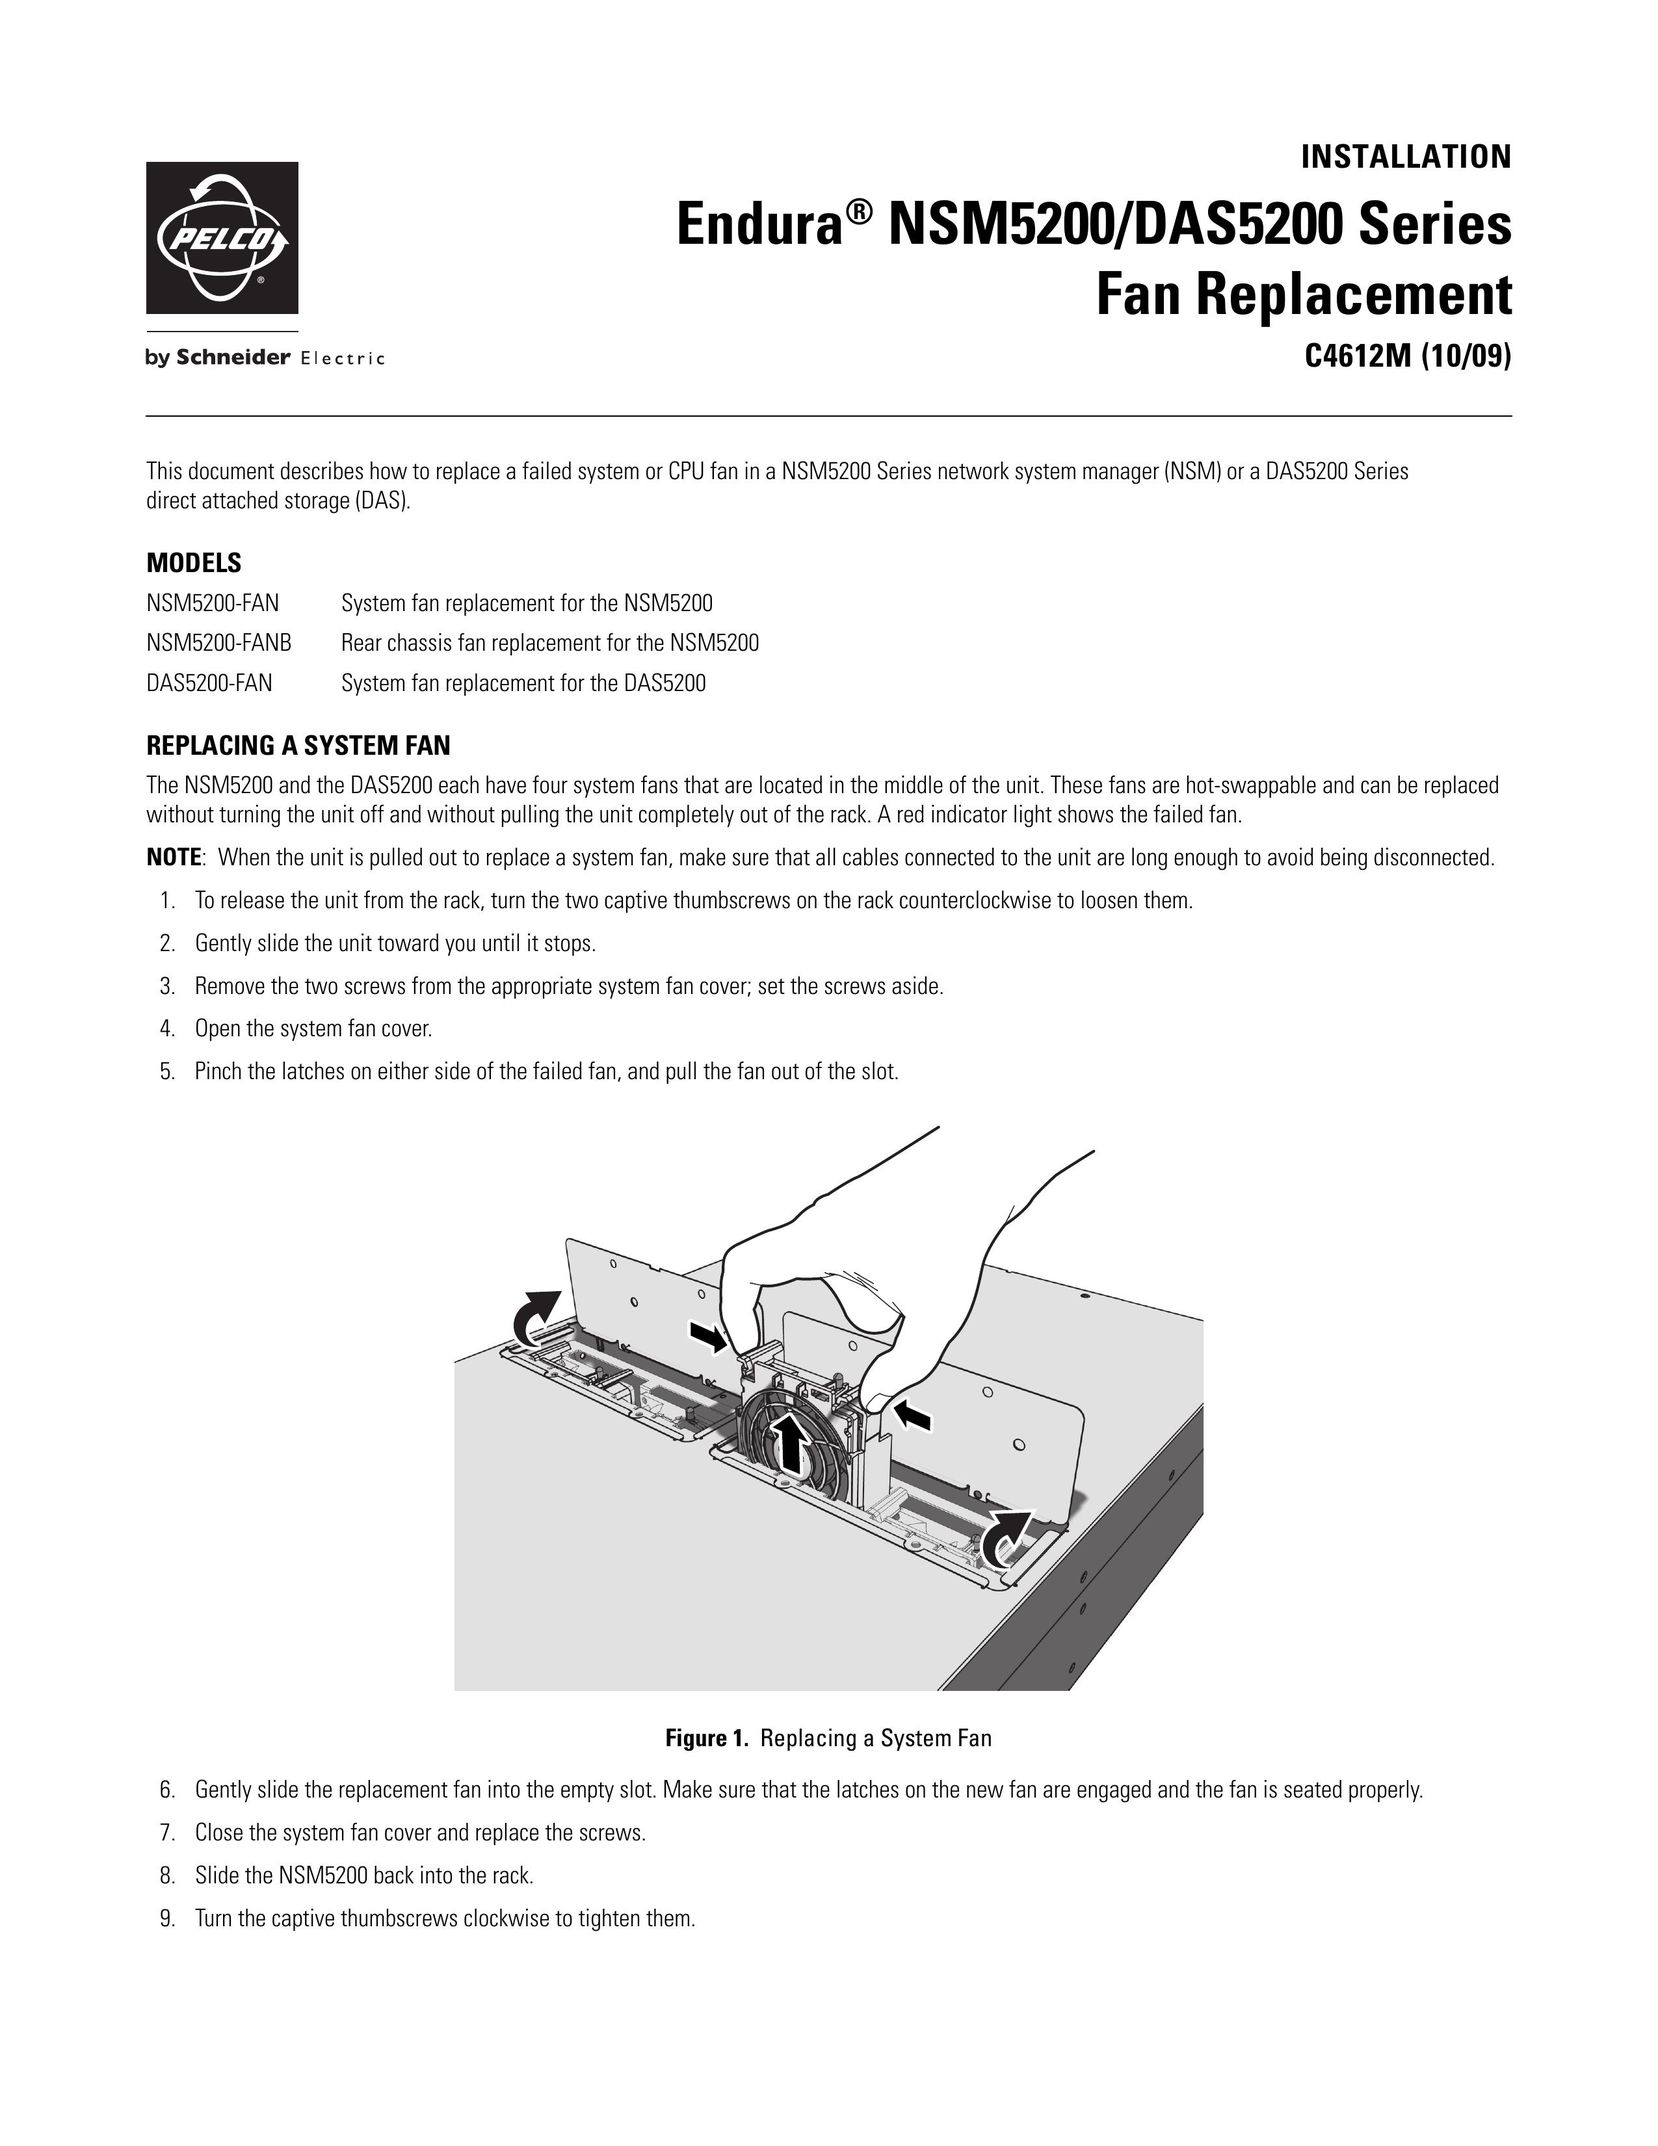 Pelco DAS5200-FAN Computer Hardware User Manual